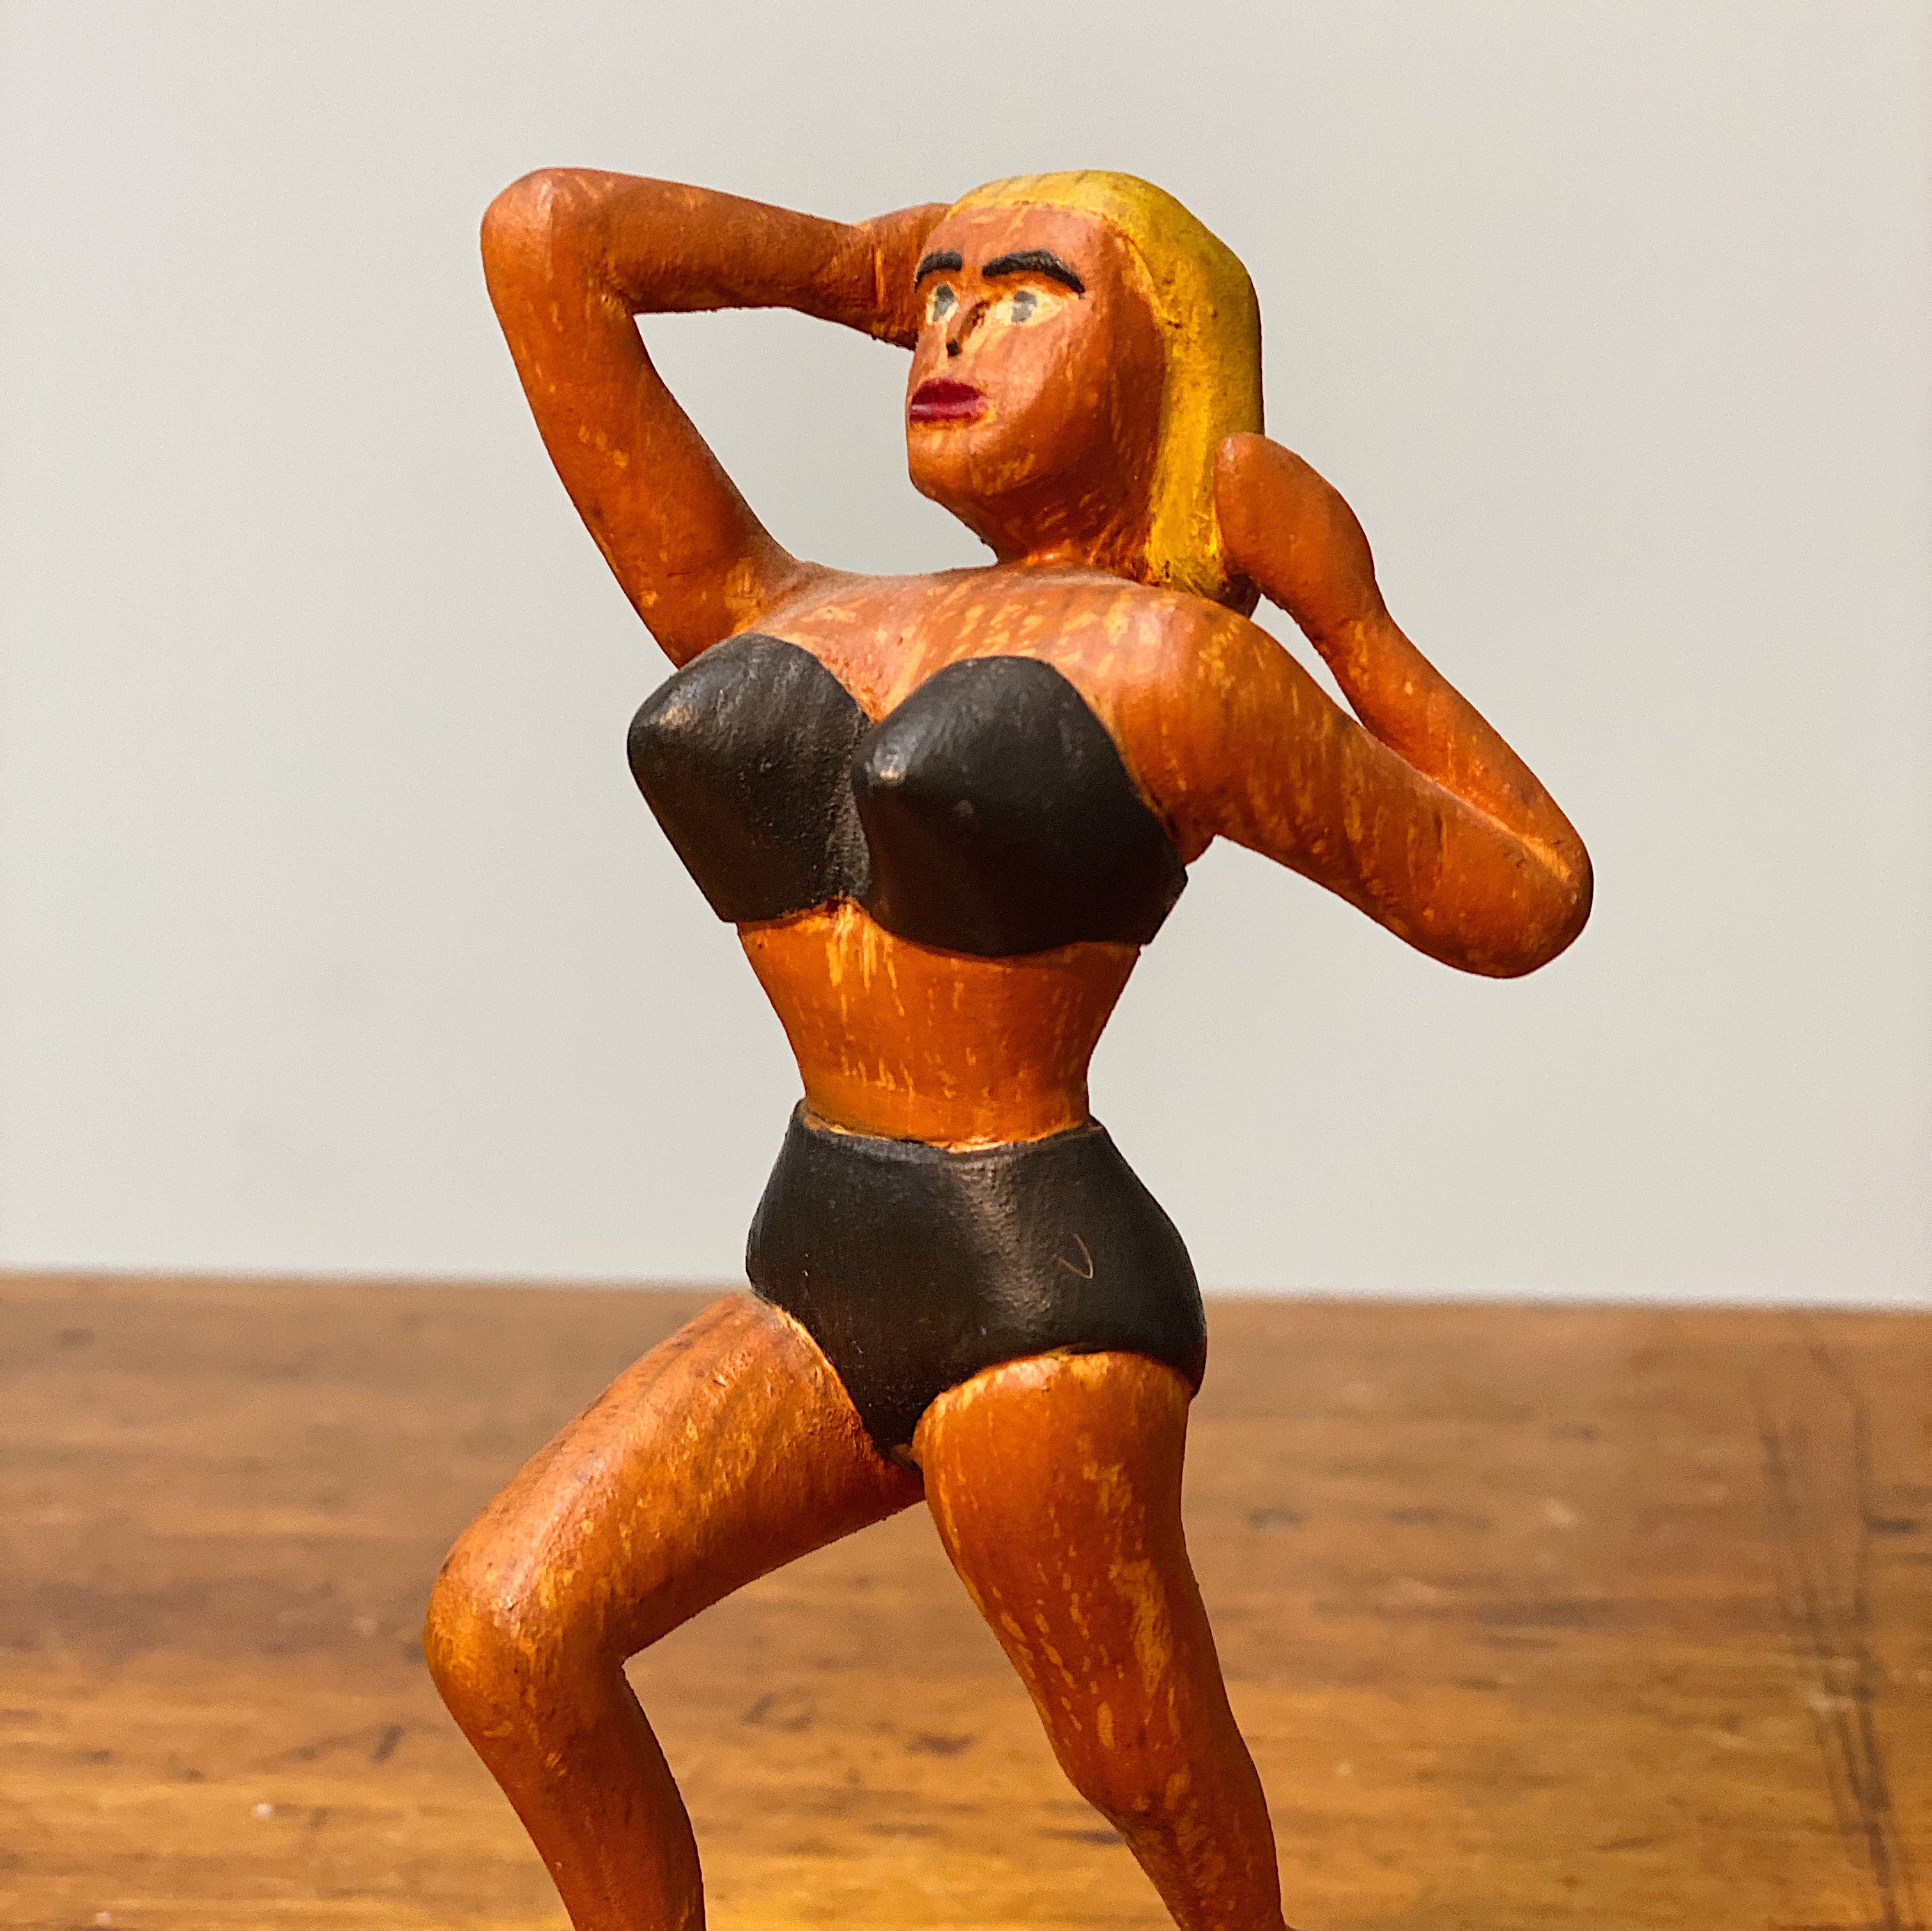 1950s Folk Art Wood Carving of Blonde Bombshell in Bikini - Vintage Underground Art - 7" Tall - Mystery Artist - Rare Sculpture Woman - Sexy